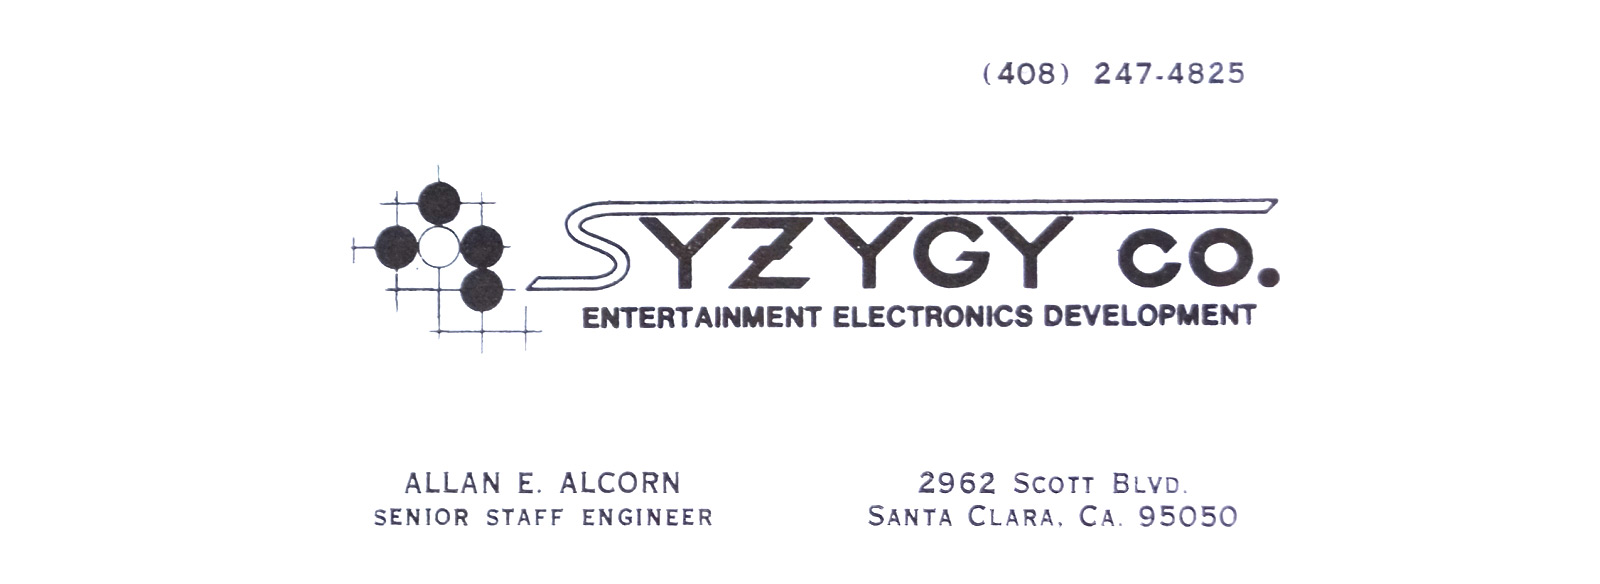 Syzygy Co. Entertainment Electronics Development